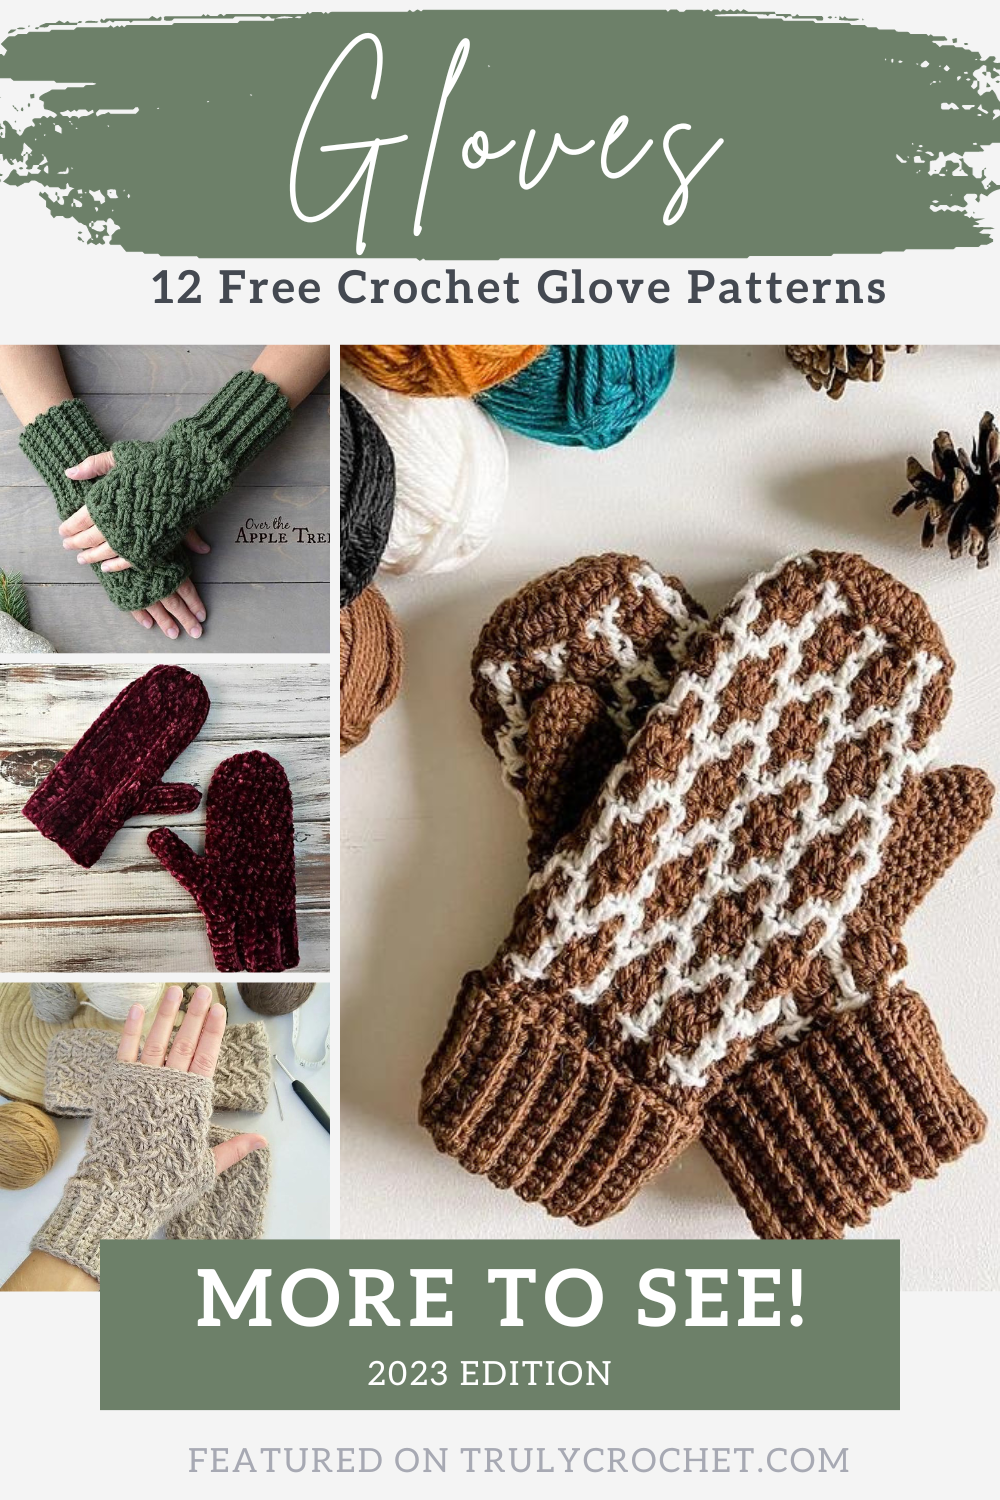 12 free crochet glove patterns - 2023 edition